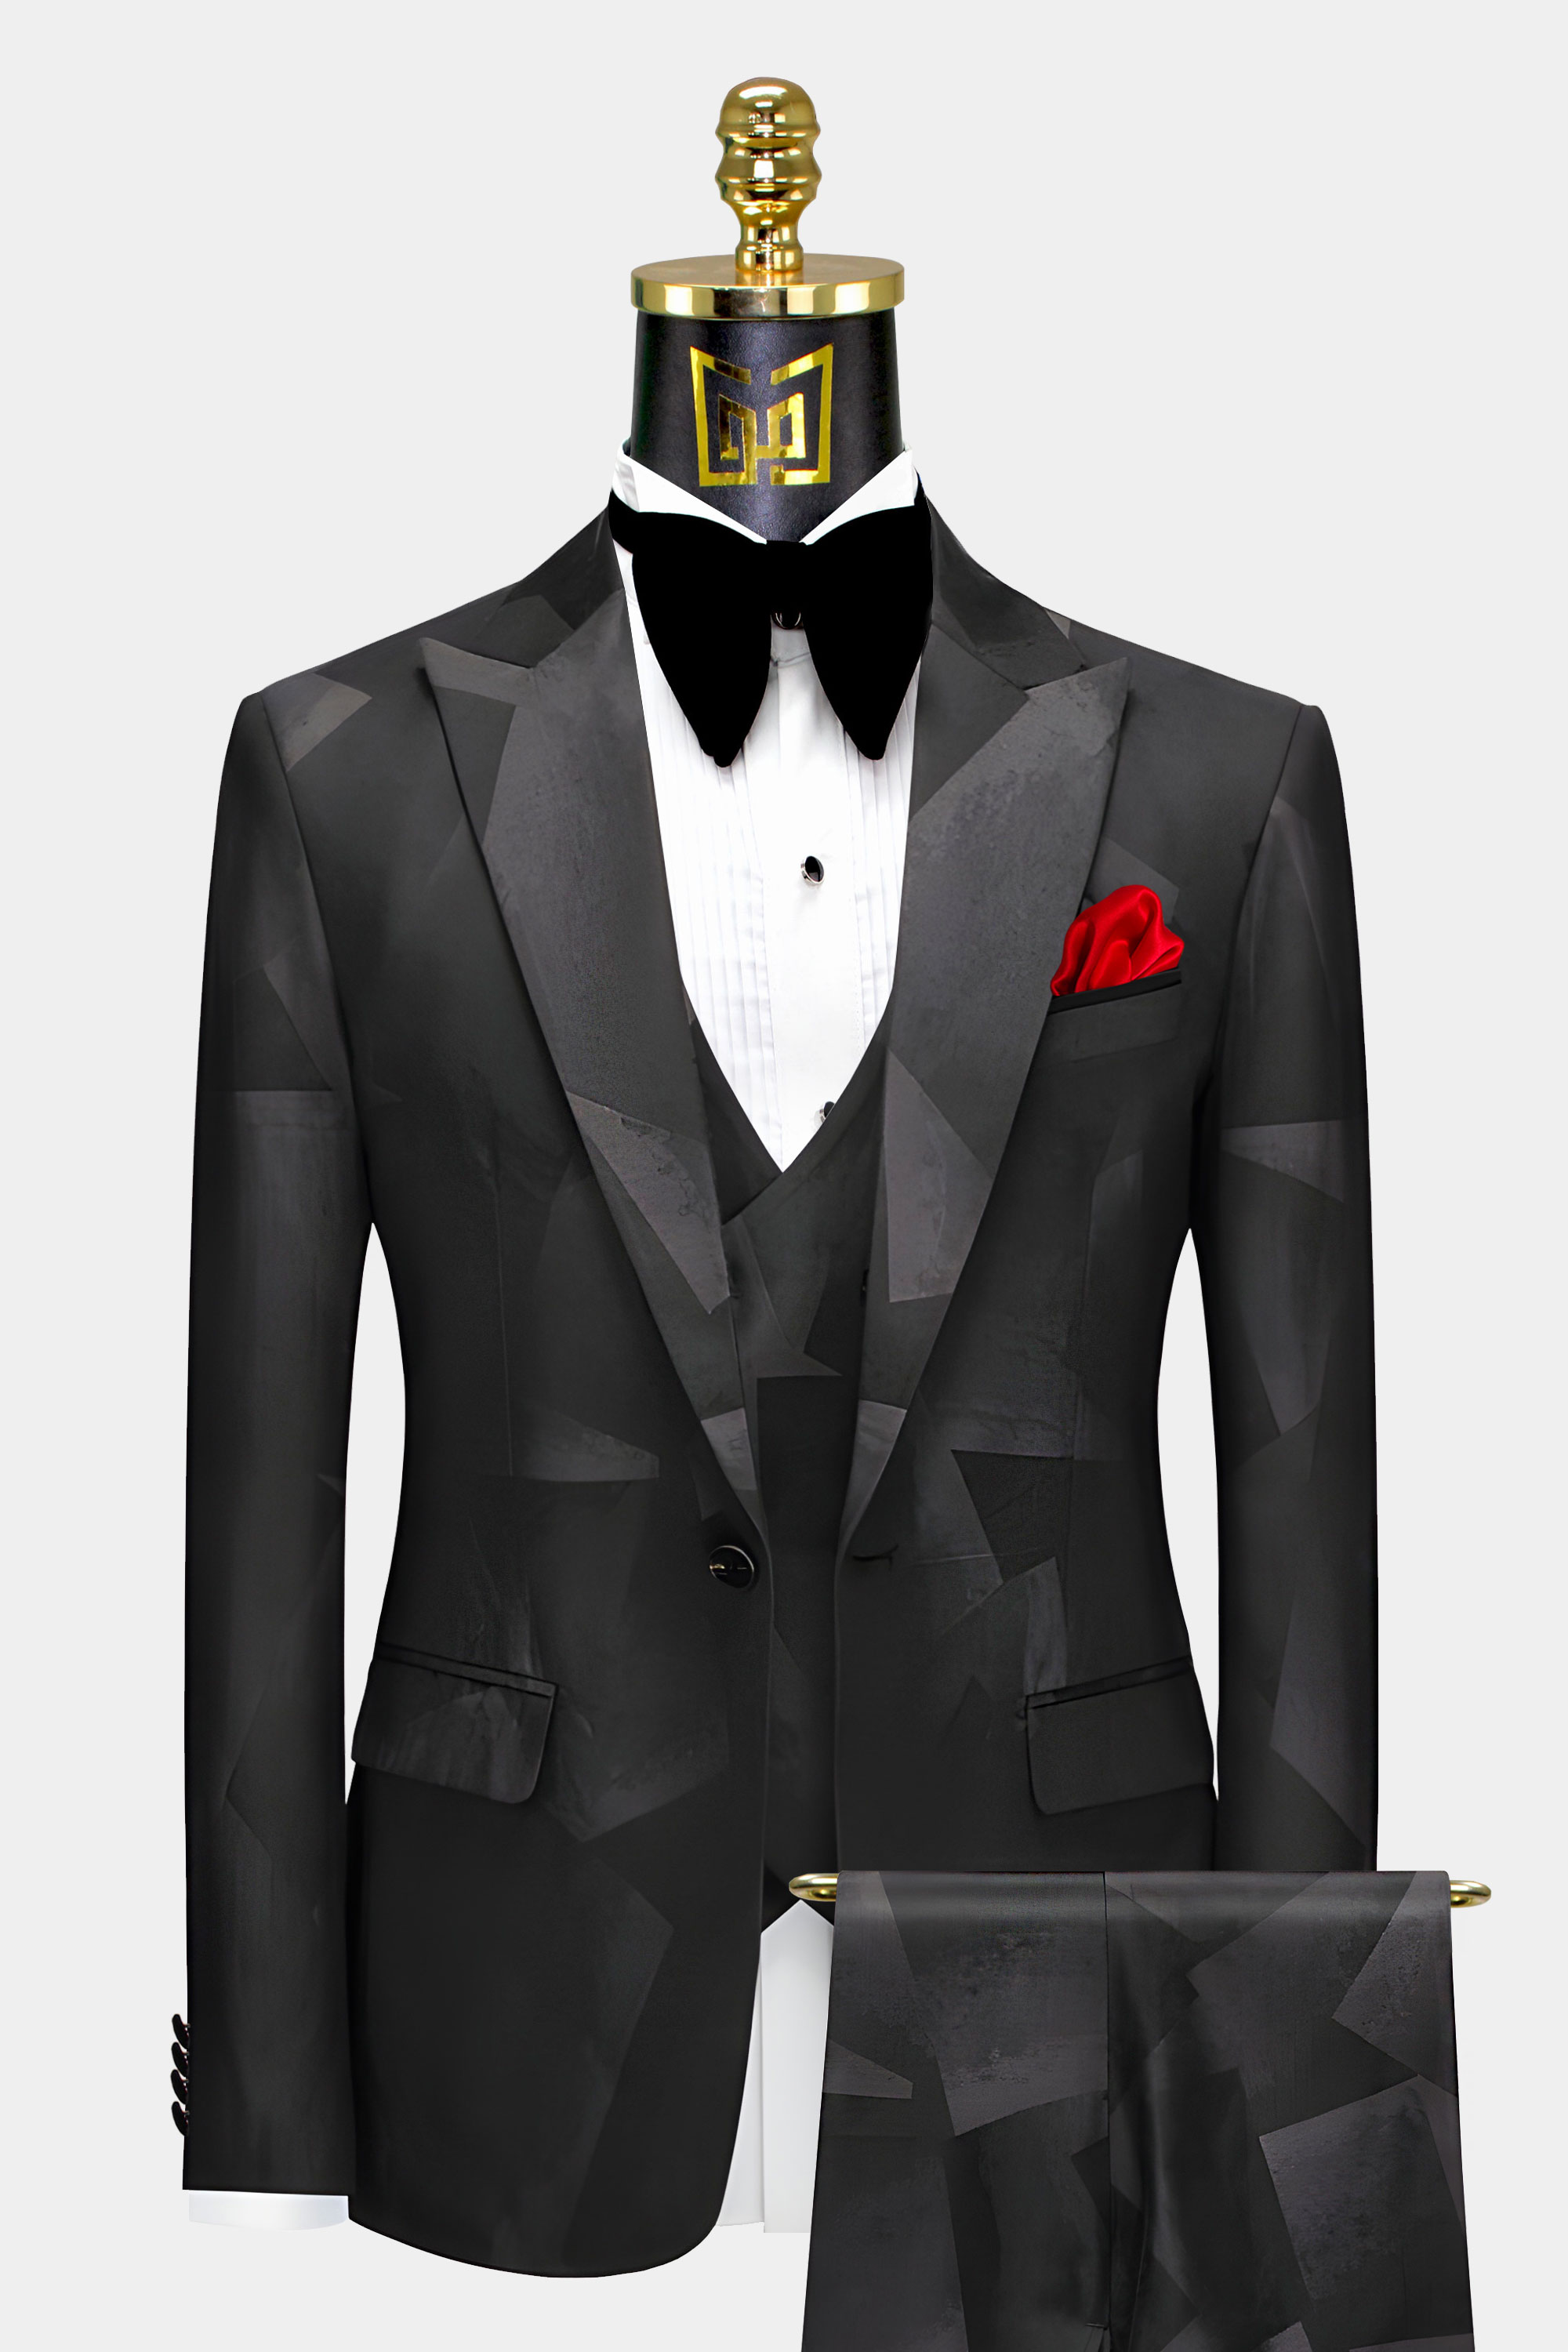 The Black Wedding Suit